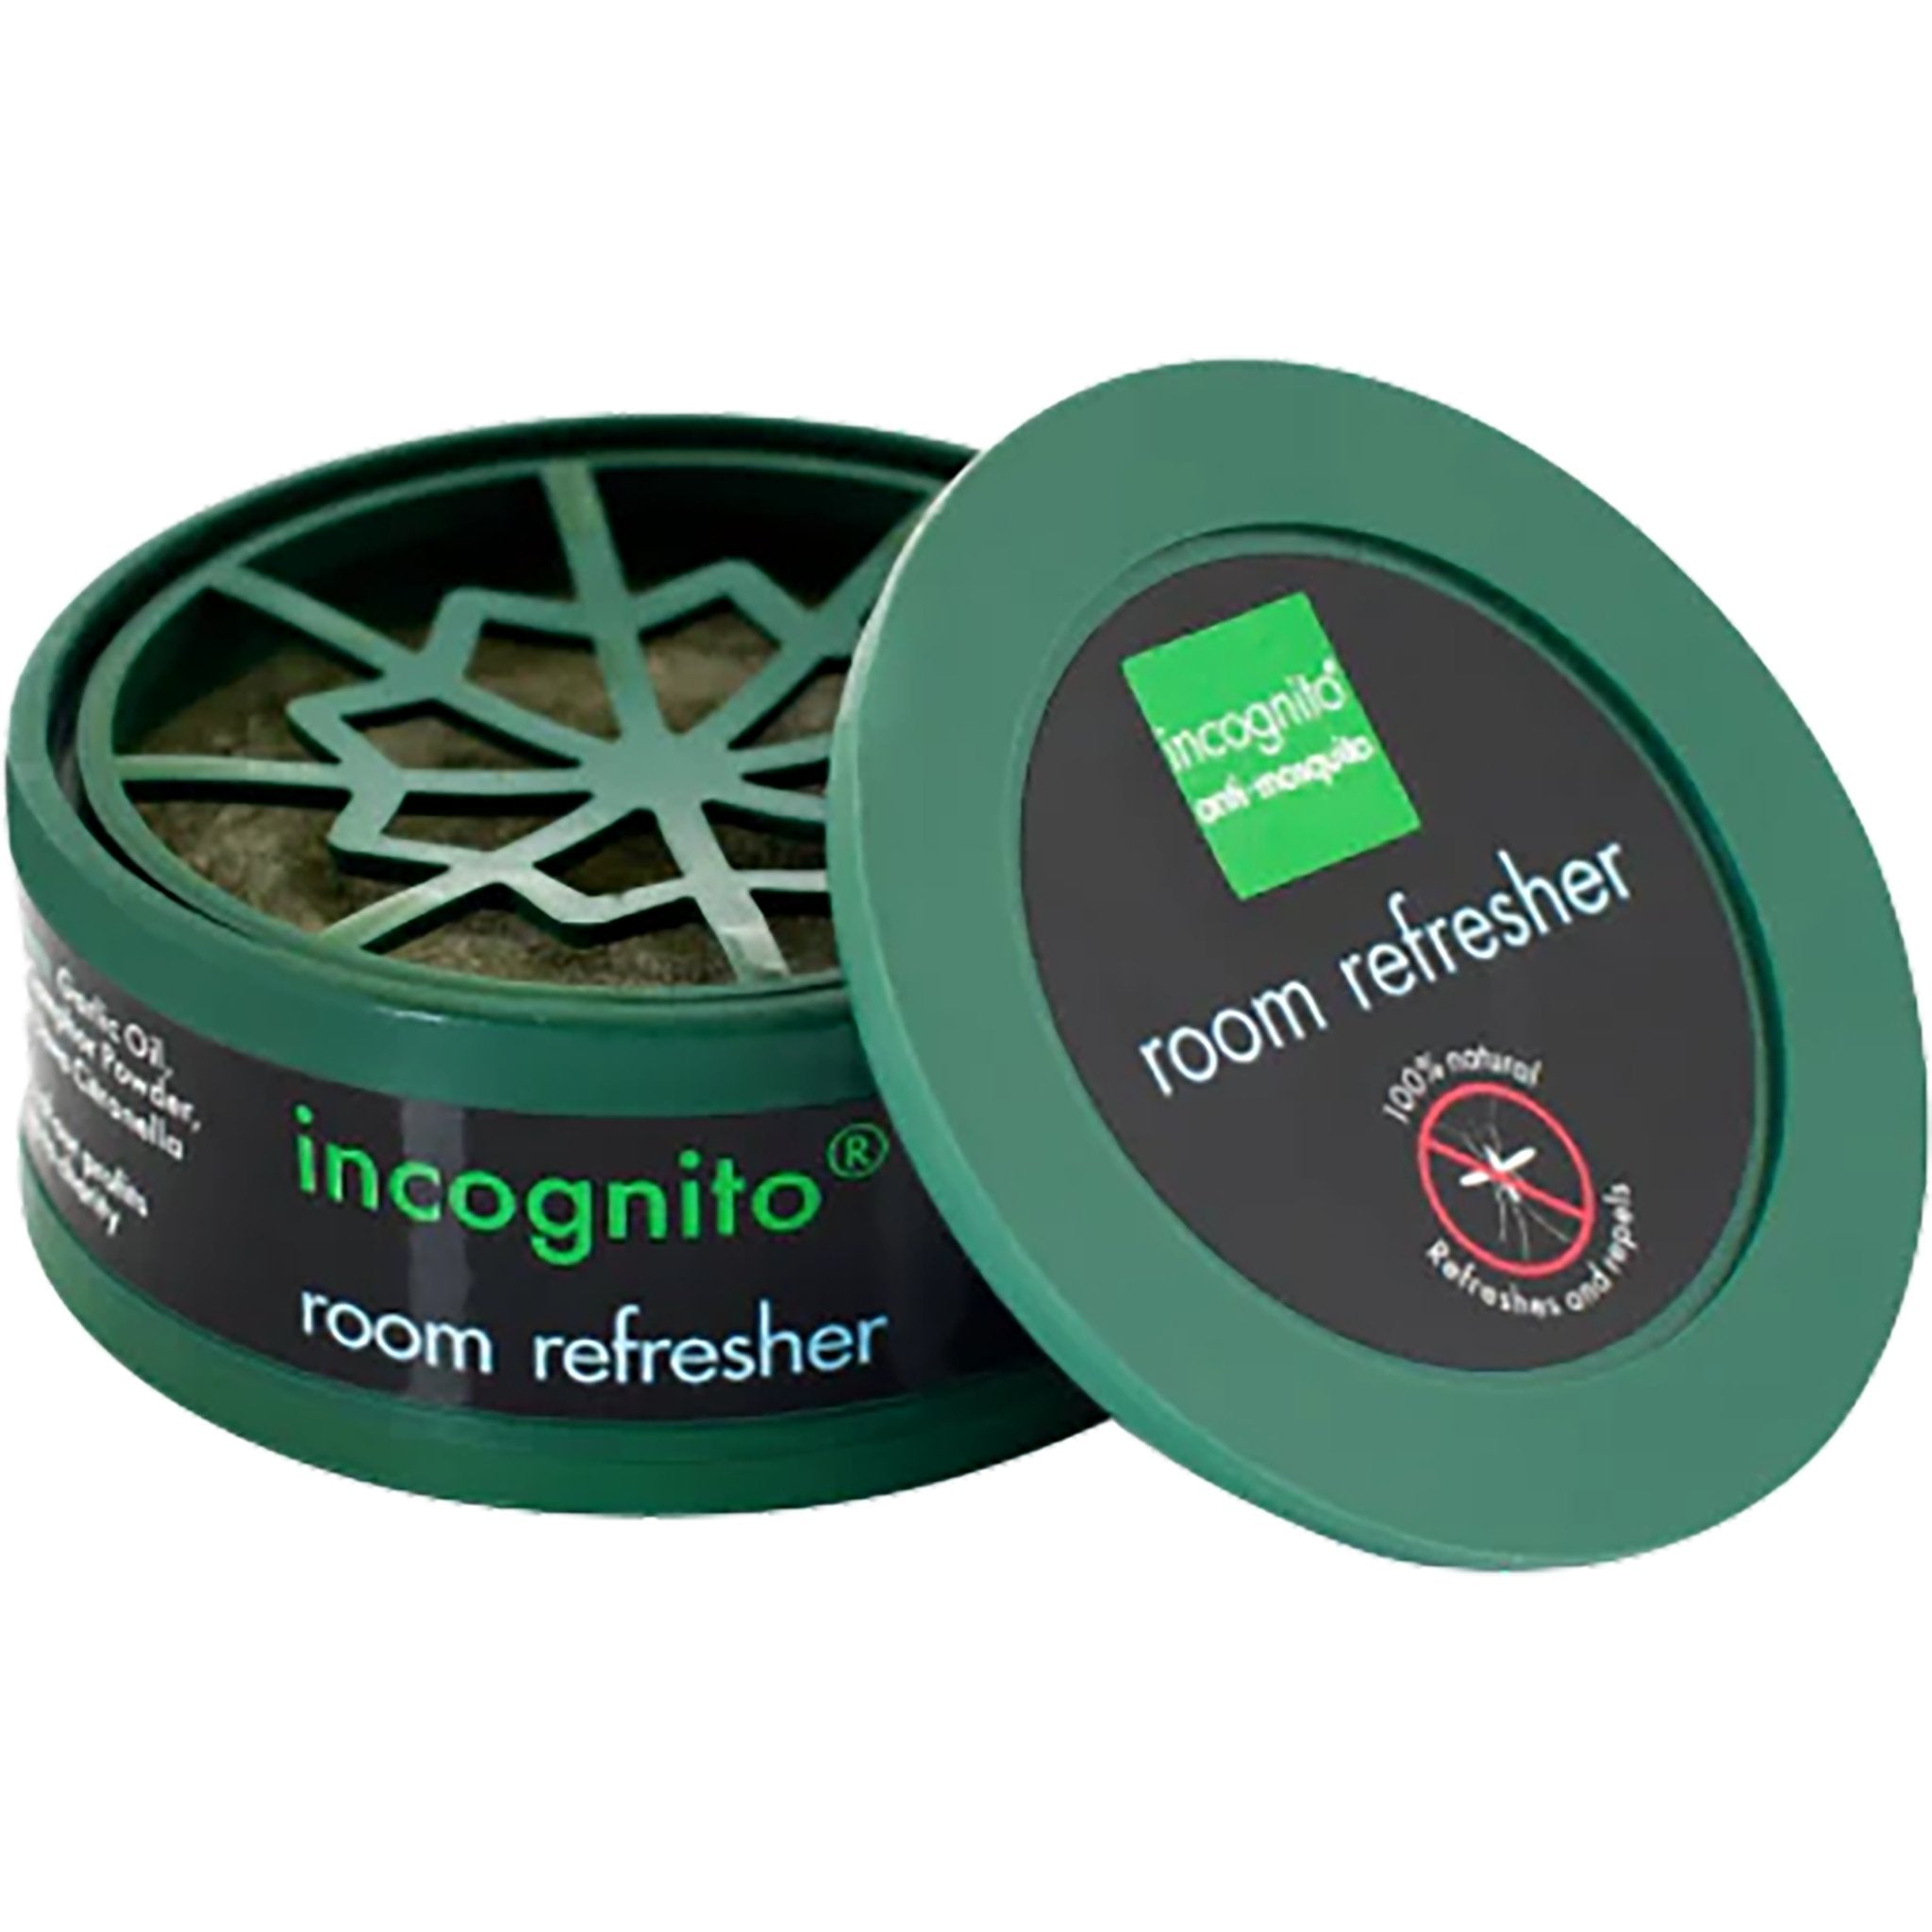 Incognito® Room Refresher - mypure.co.uk